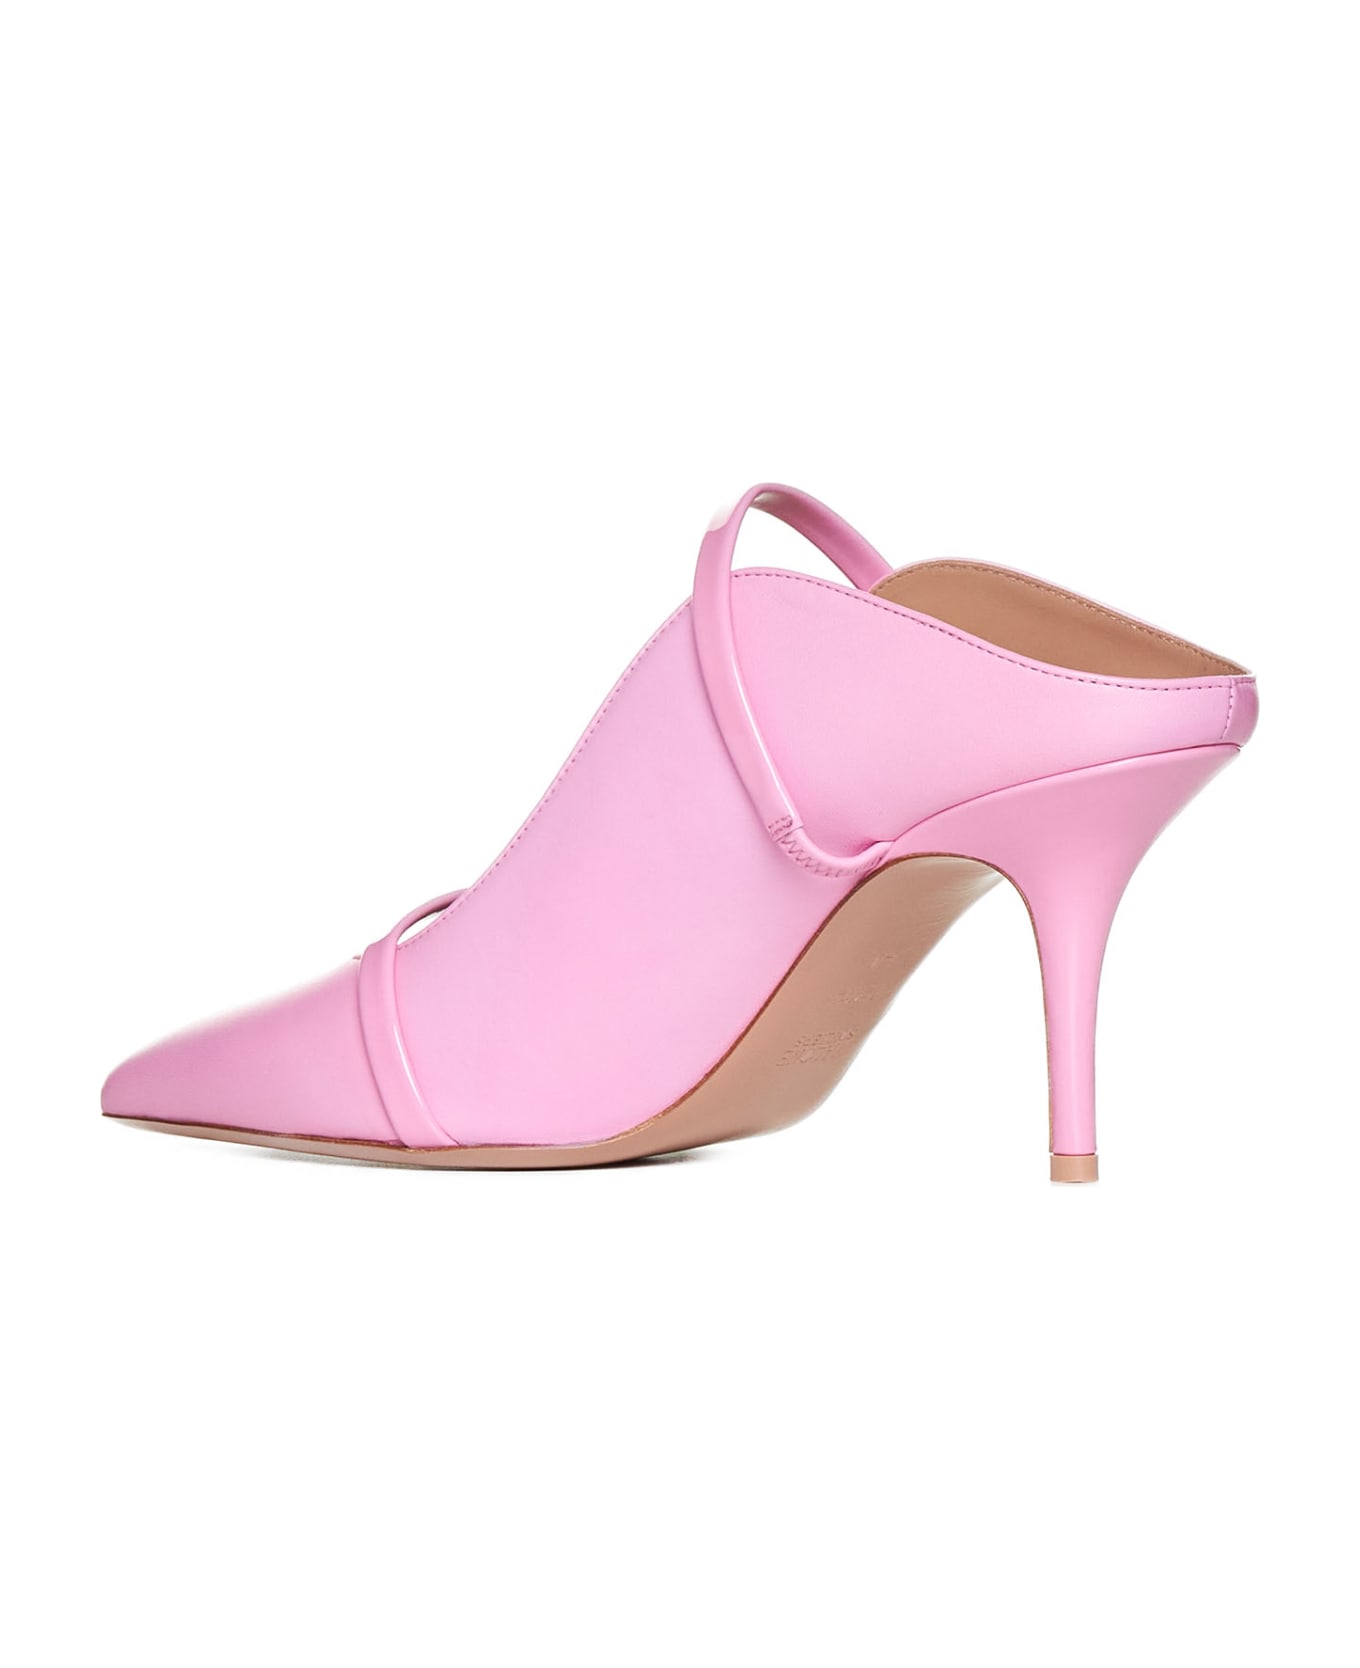 Malone Souliers Sandals - Flamingo/flamingo